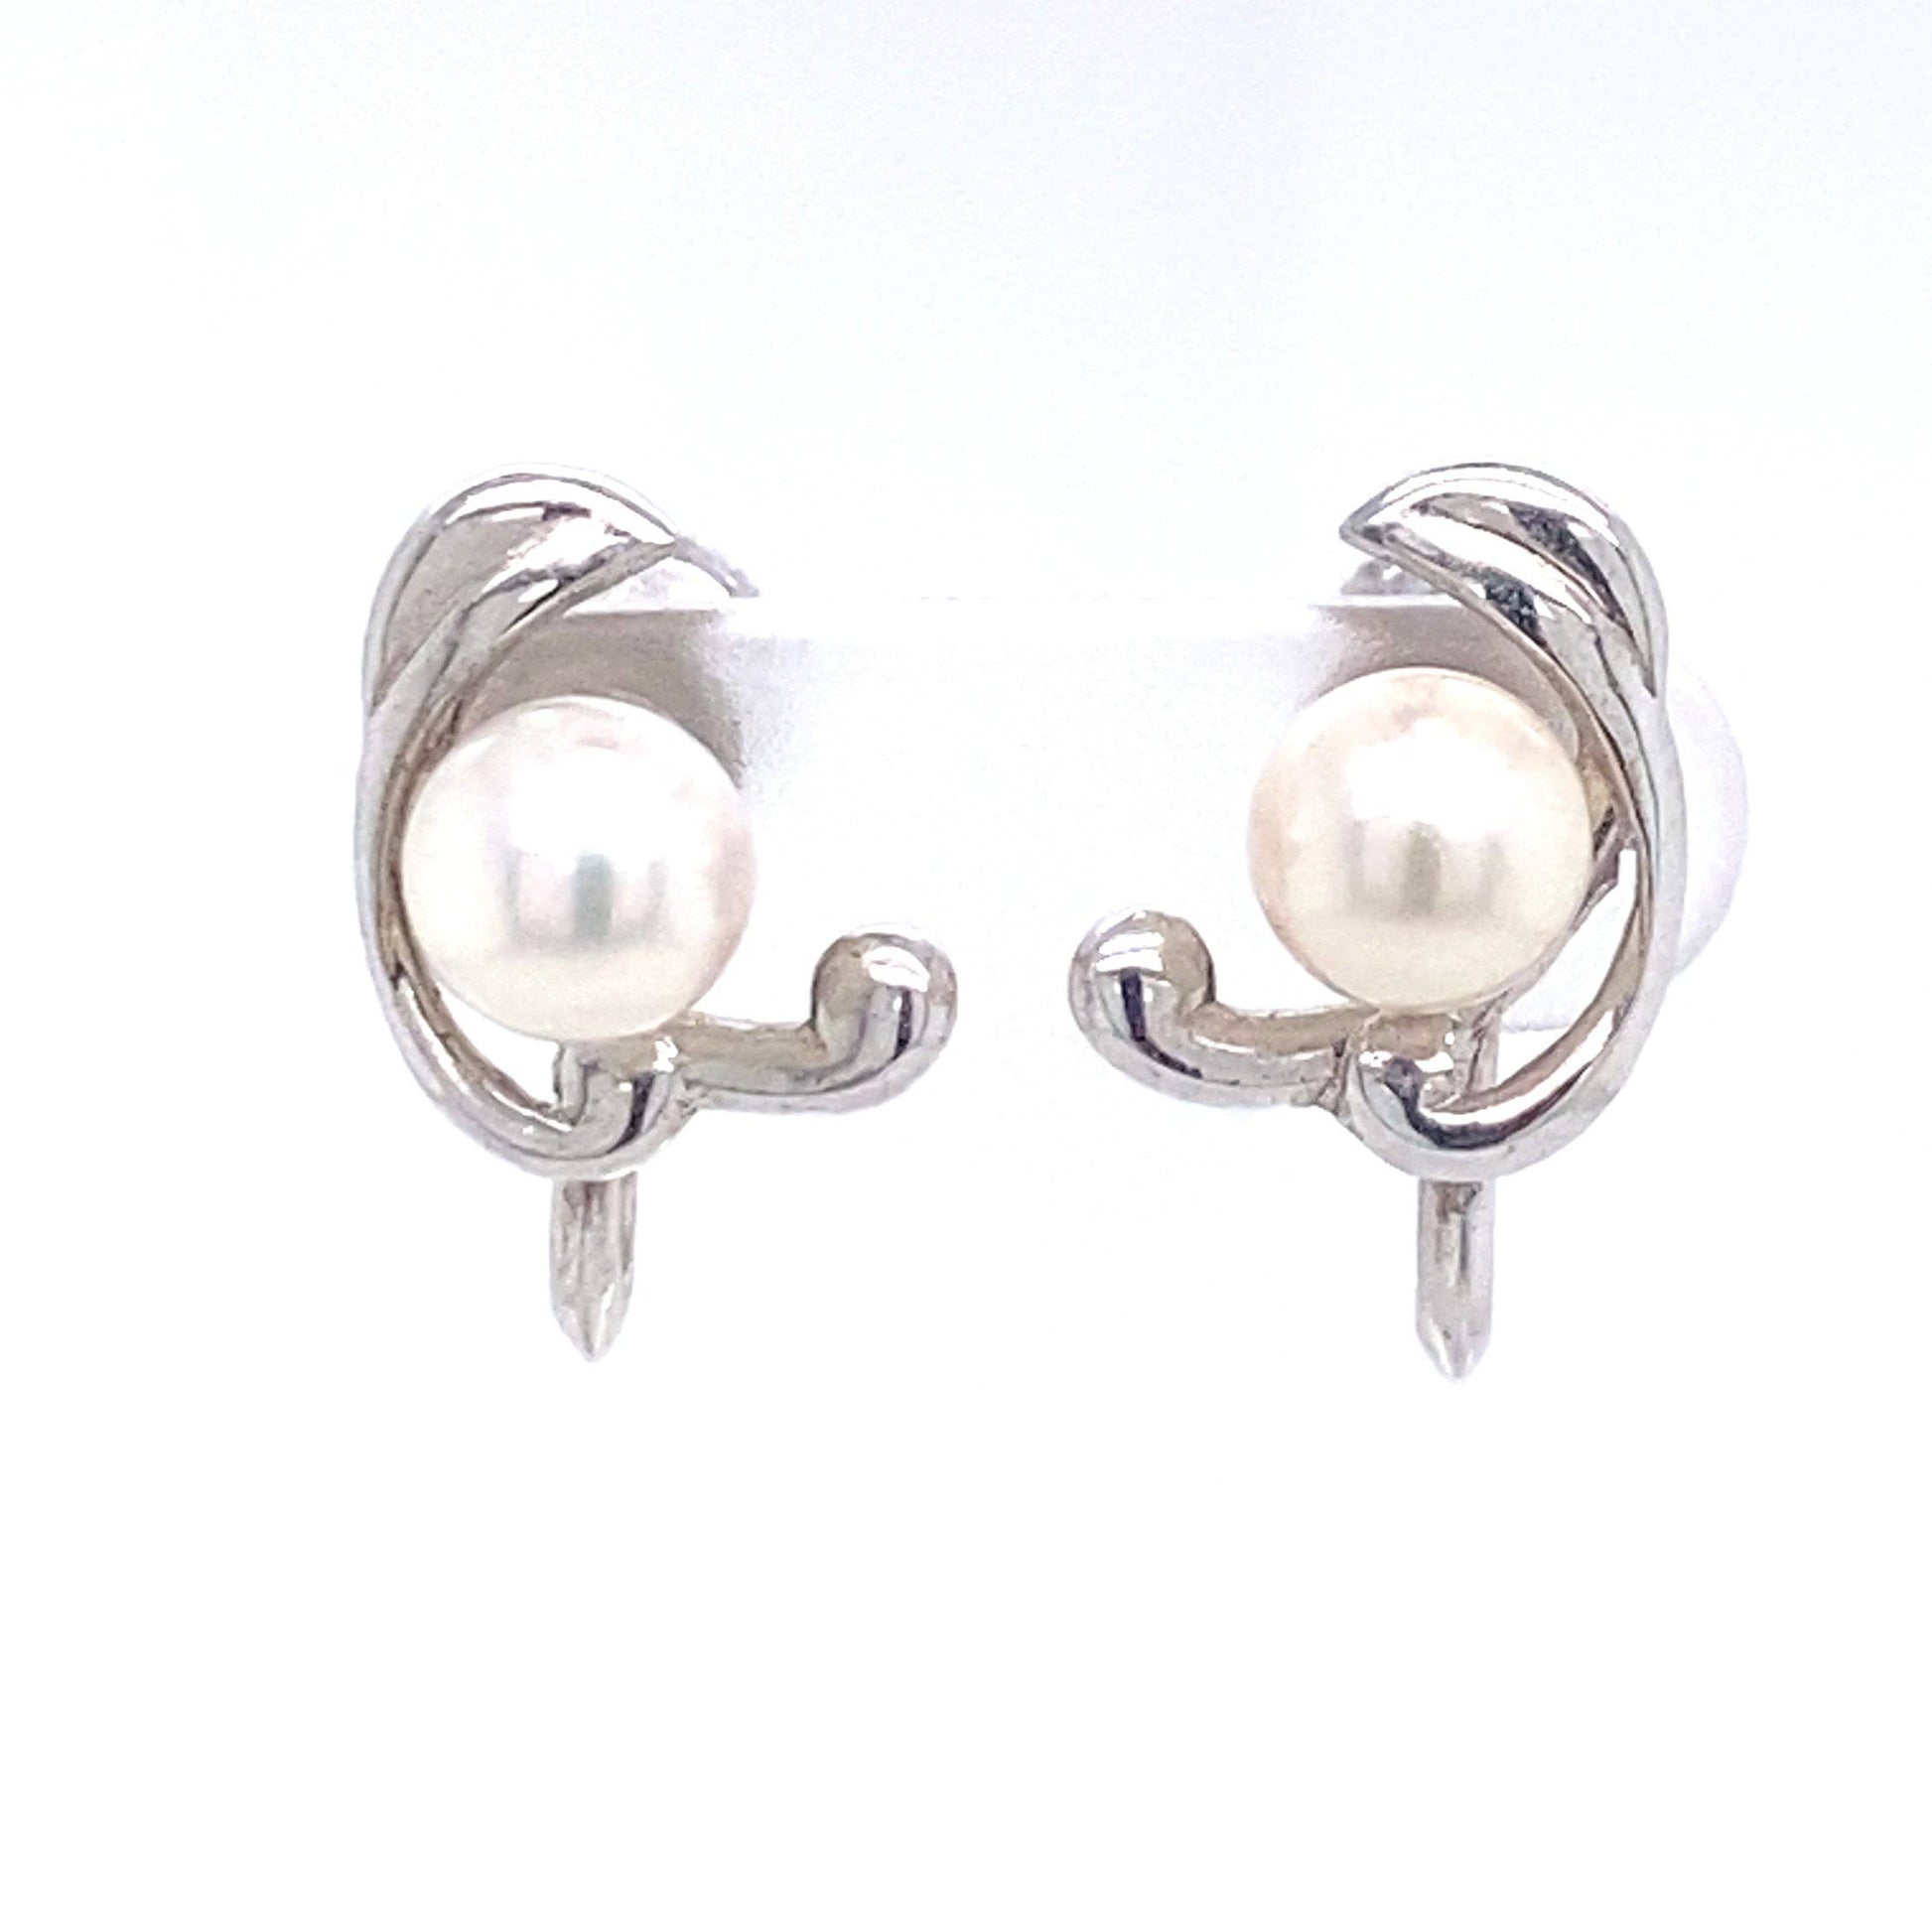 Mikimoto Estate Akoya Pearl Clip On Earrings Sterling Silver 6mm 3.53 Grams M173 - Certified Estate Jewelry